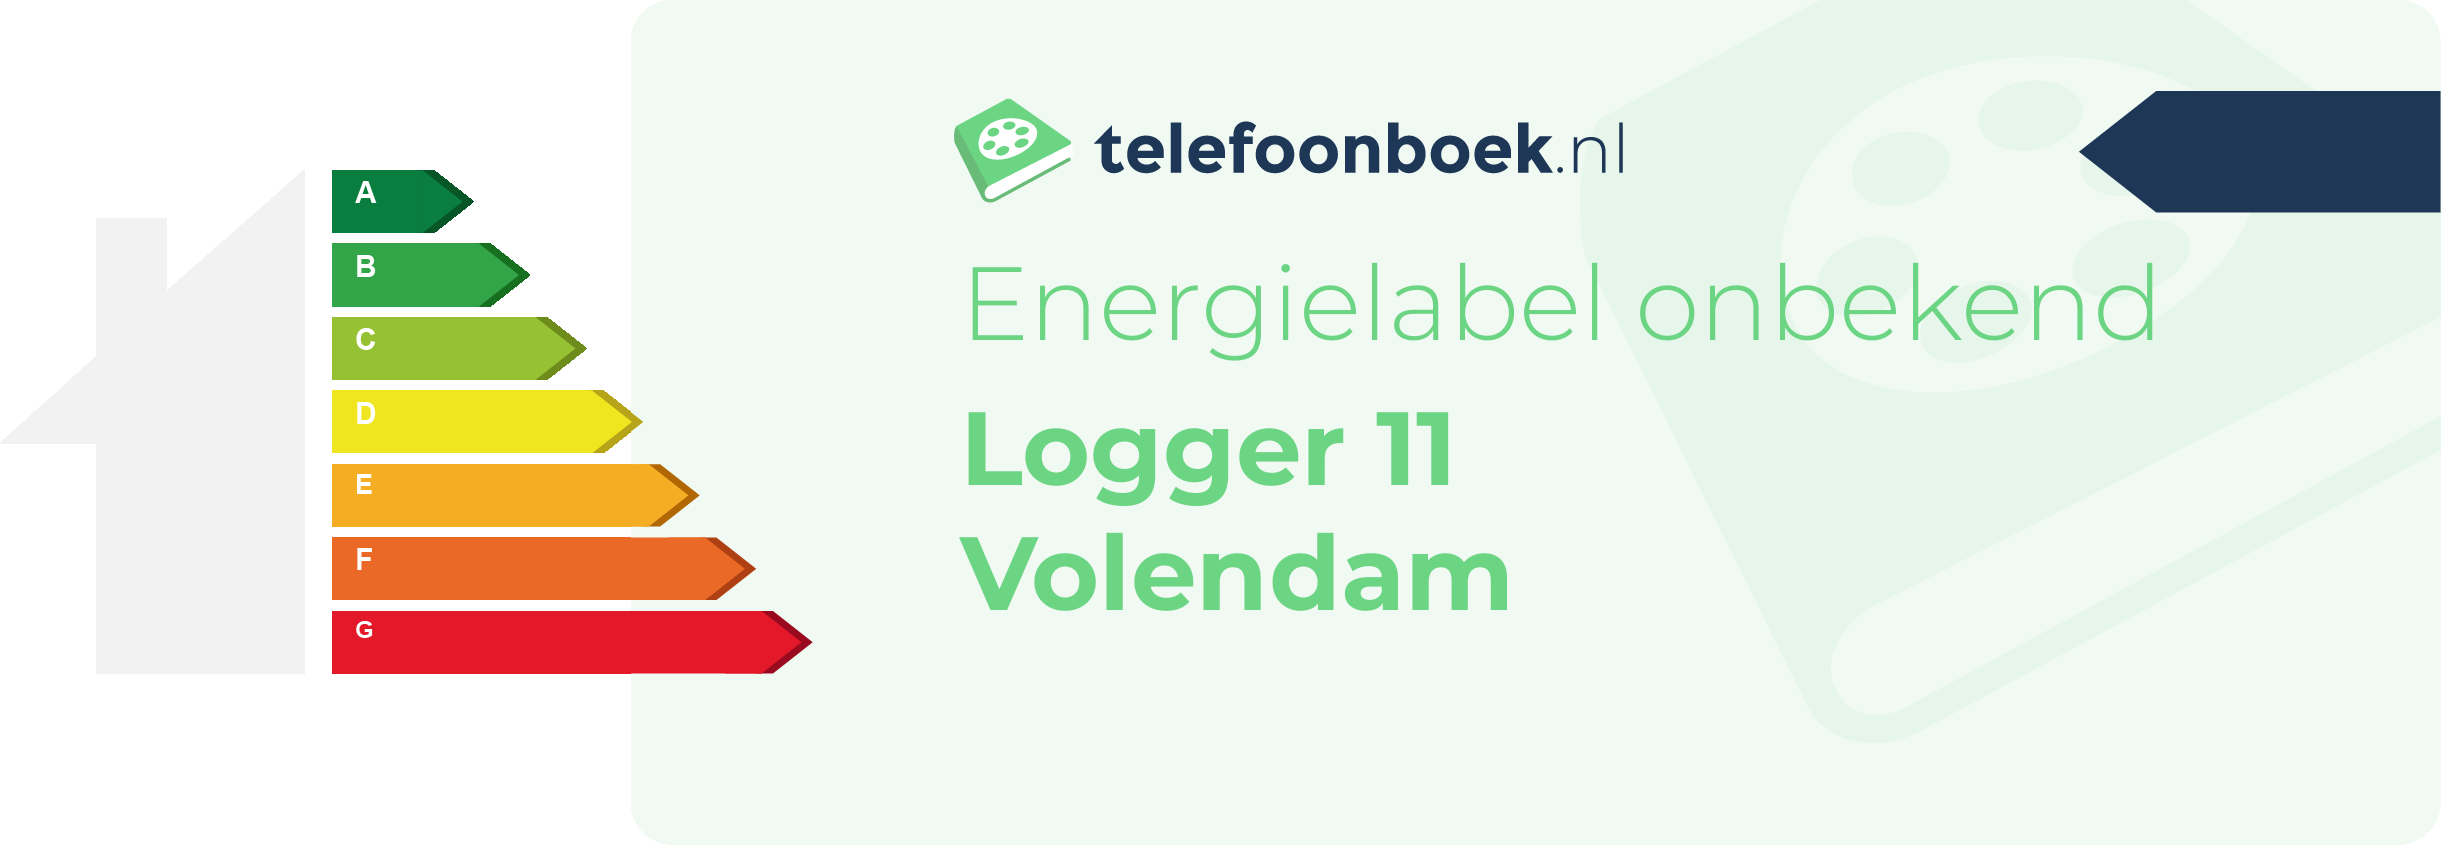 Energielabel Logger 11 Volendam